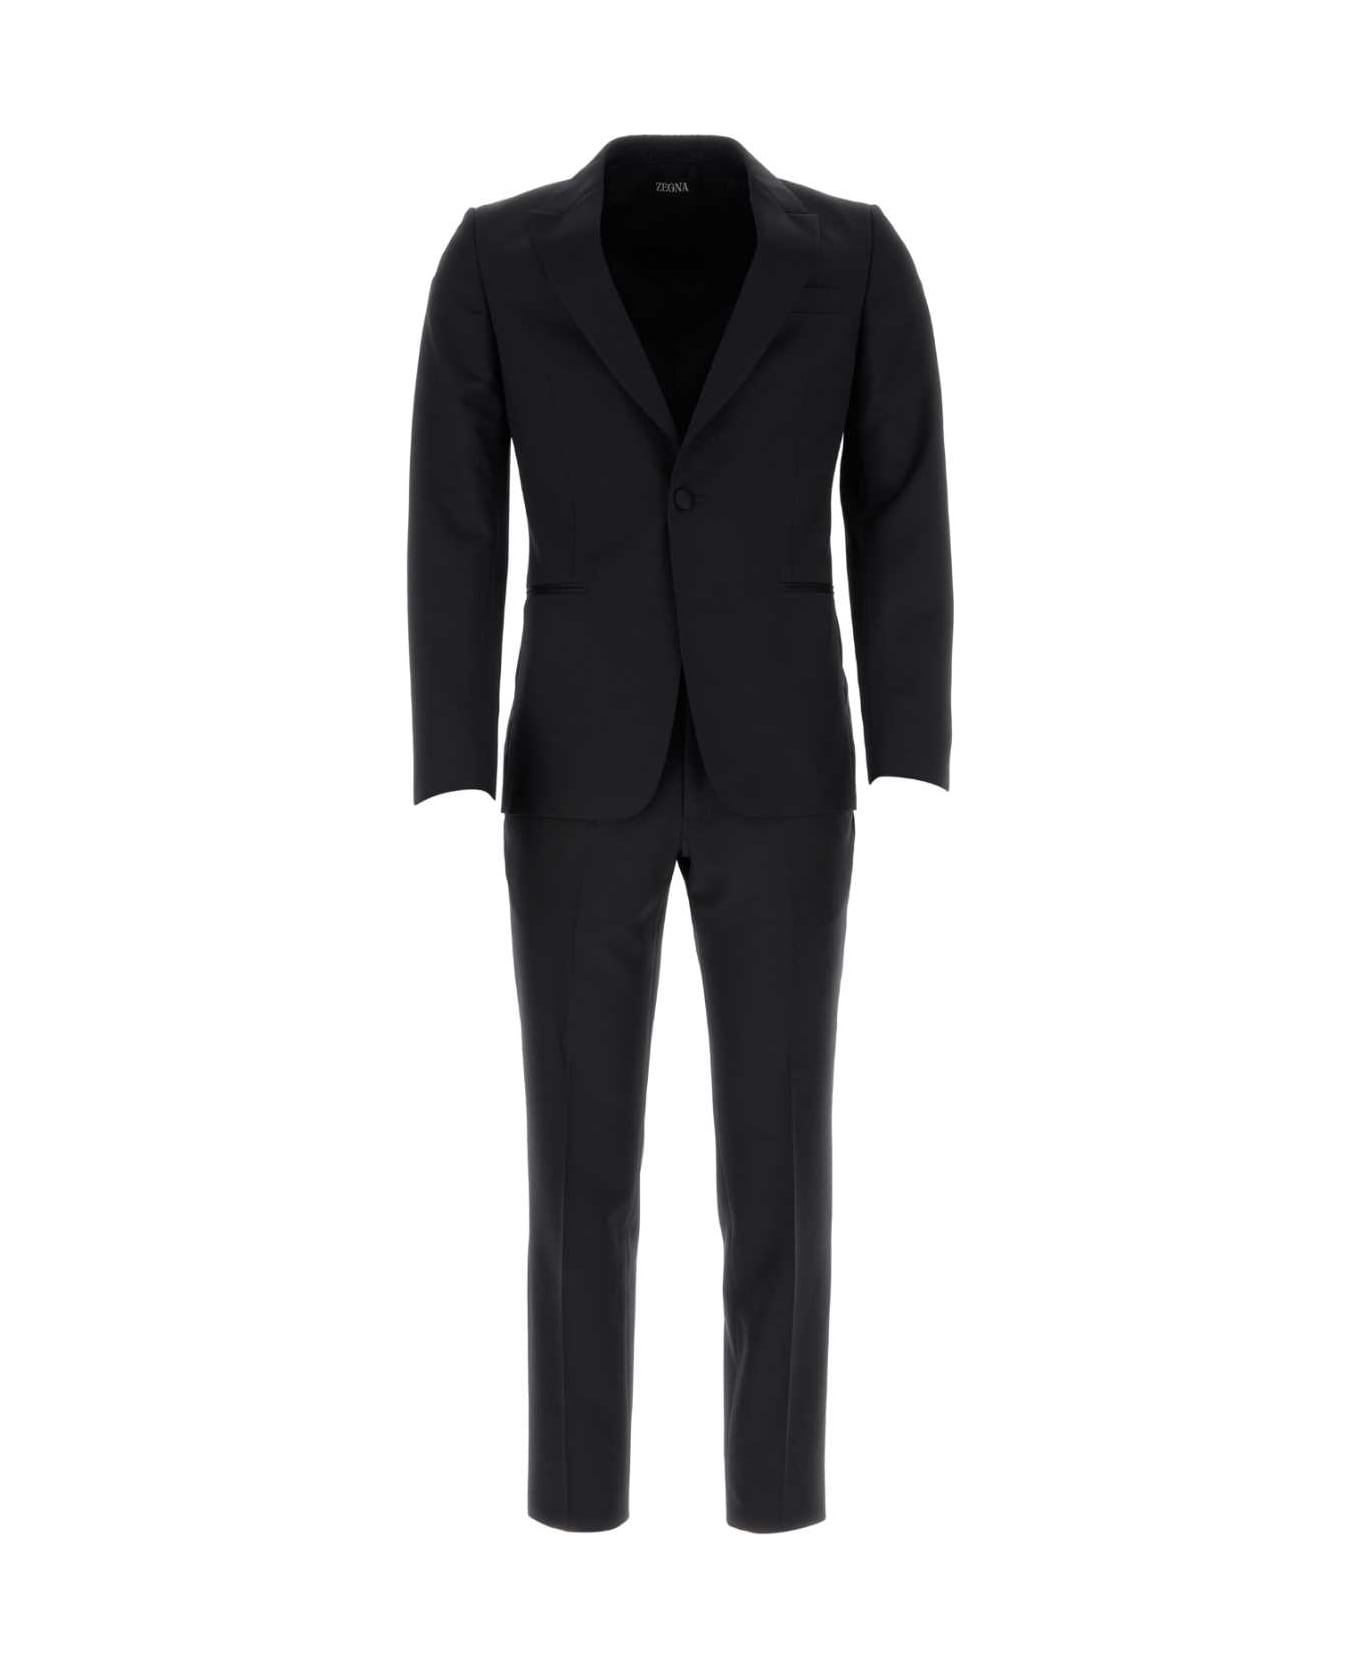 Zegna Black Wool Blend Suit - 8R スーツ